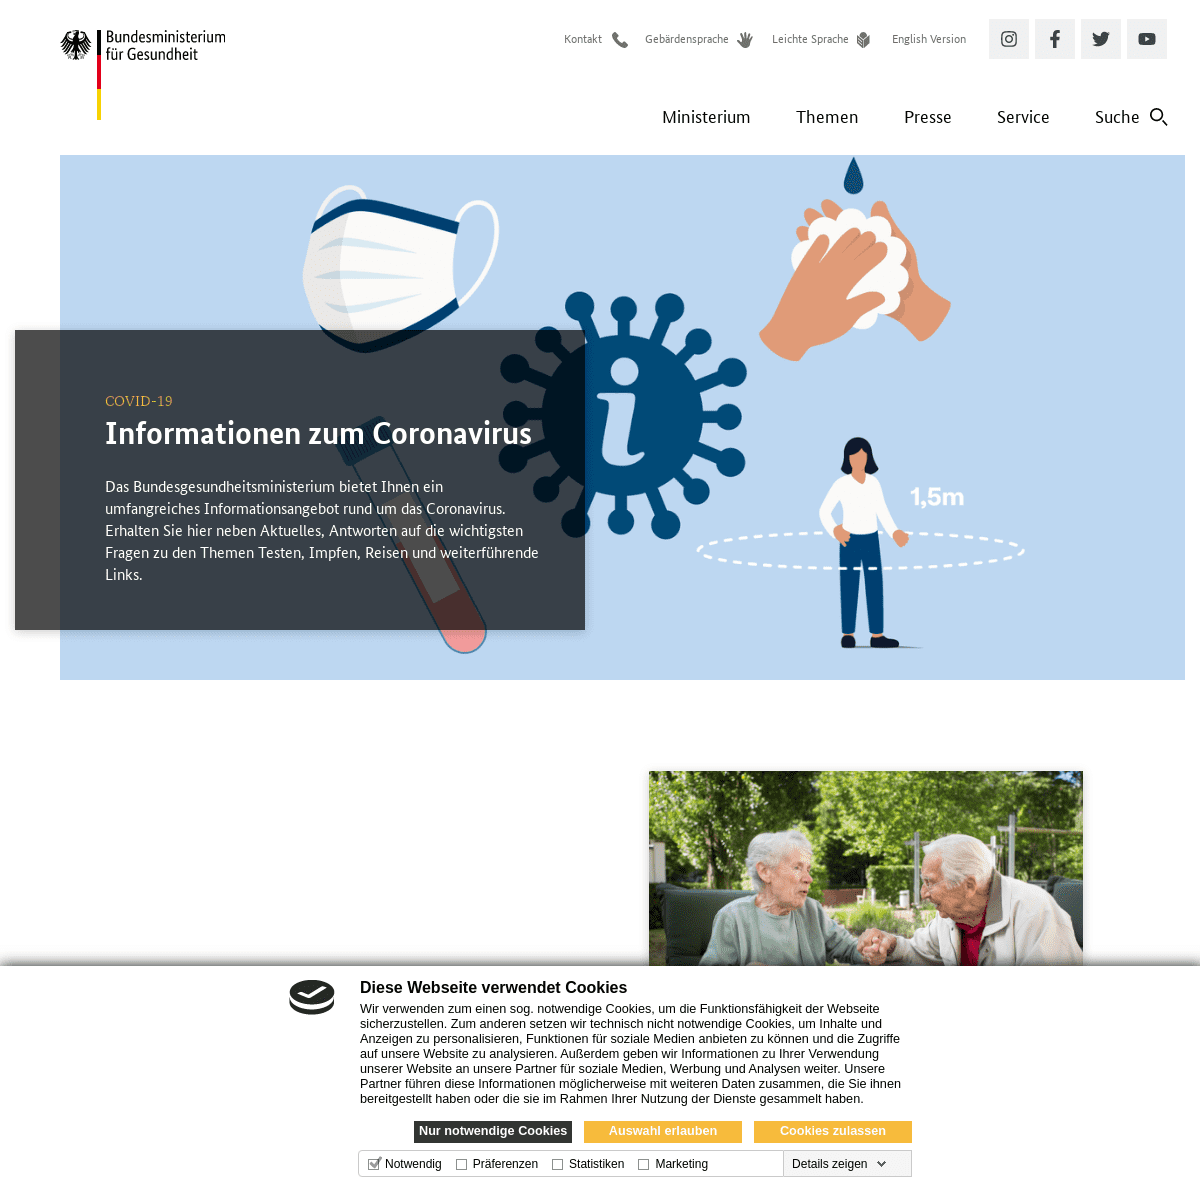 A complete backup of https://bundesgesundheitsministerium.de